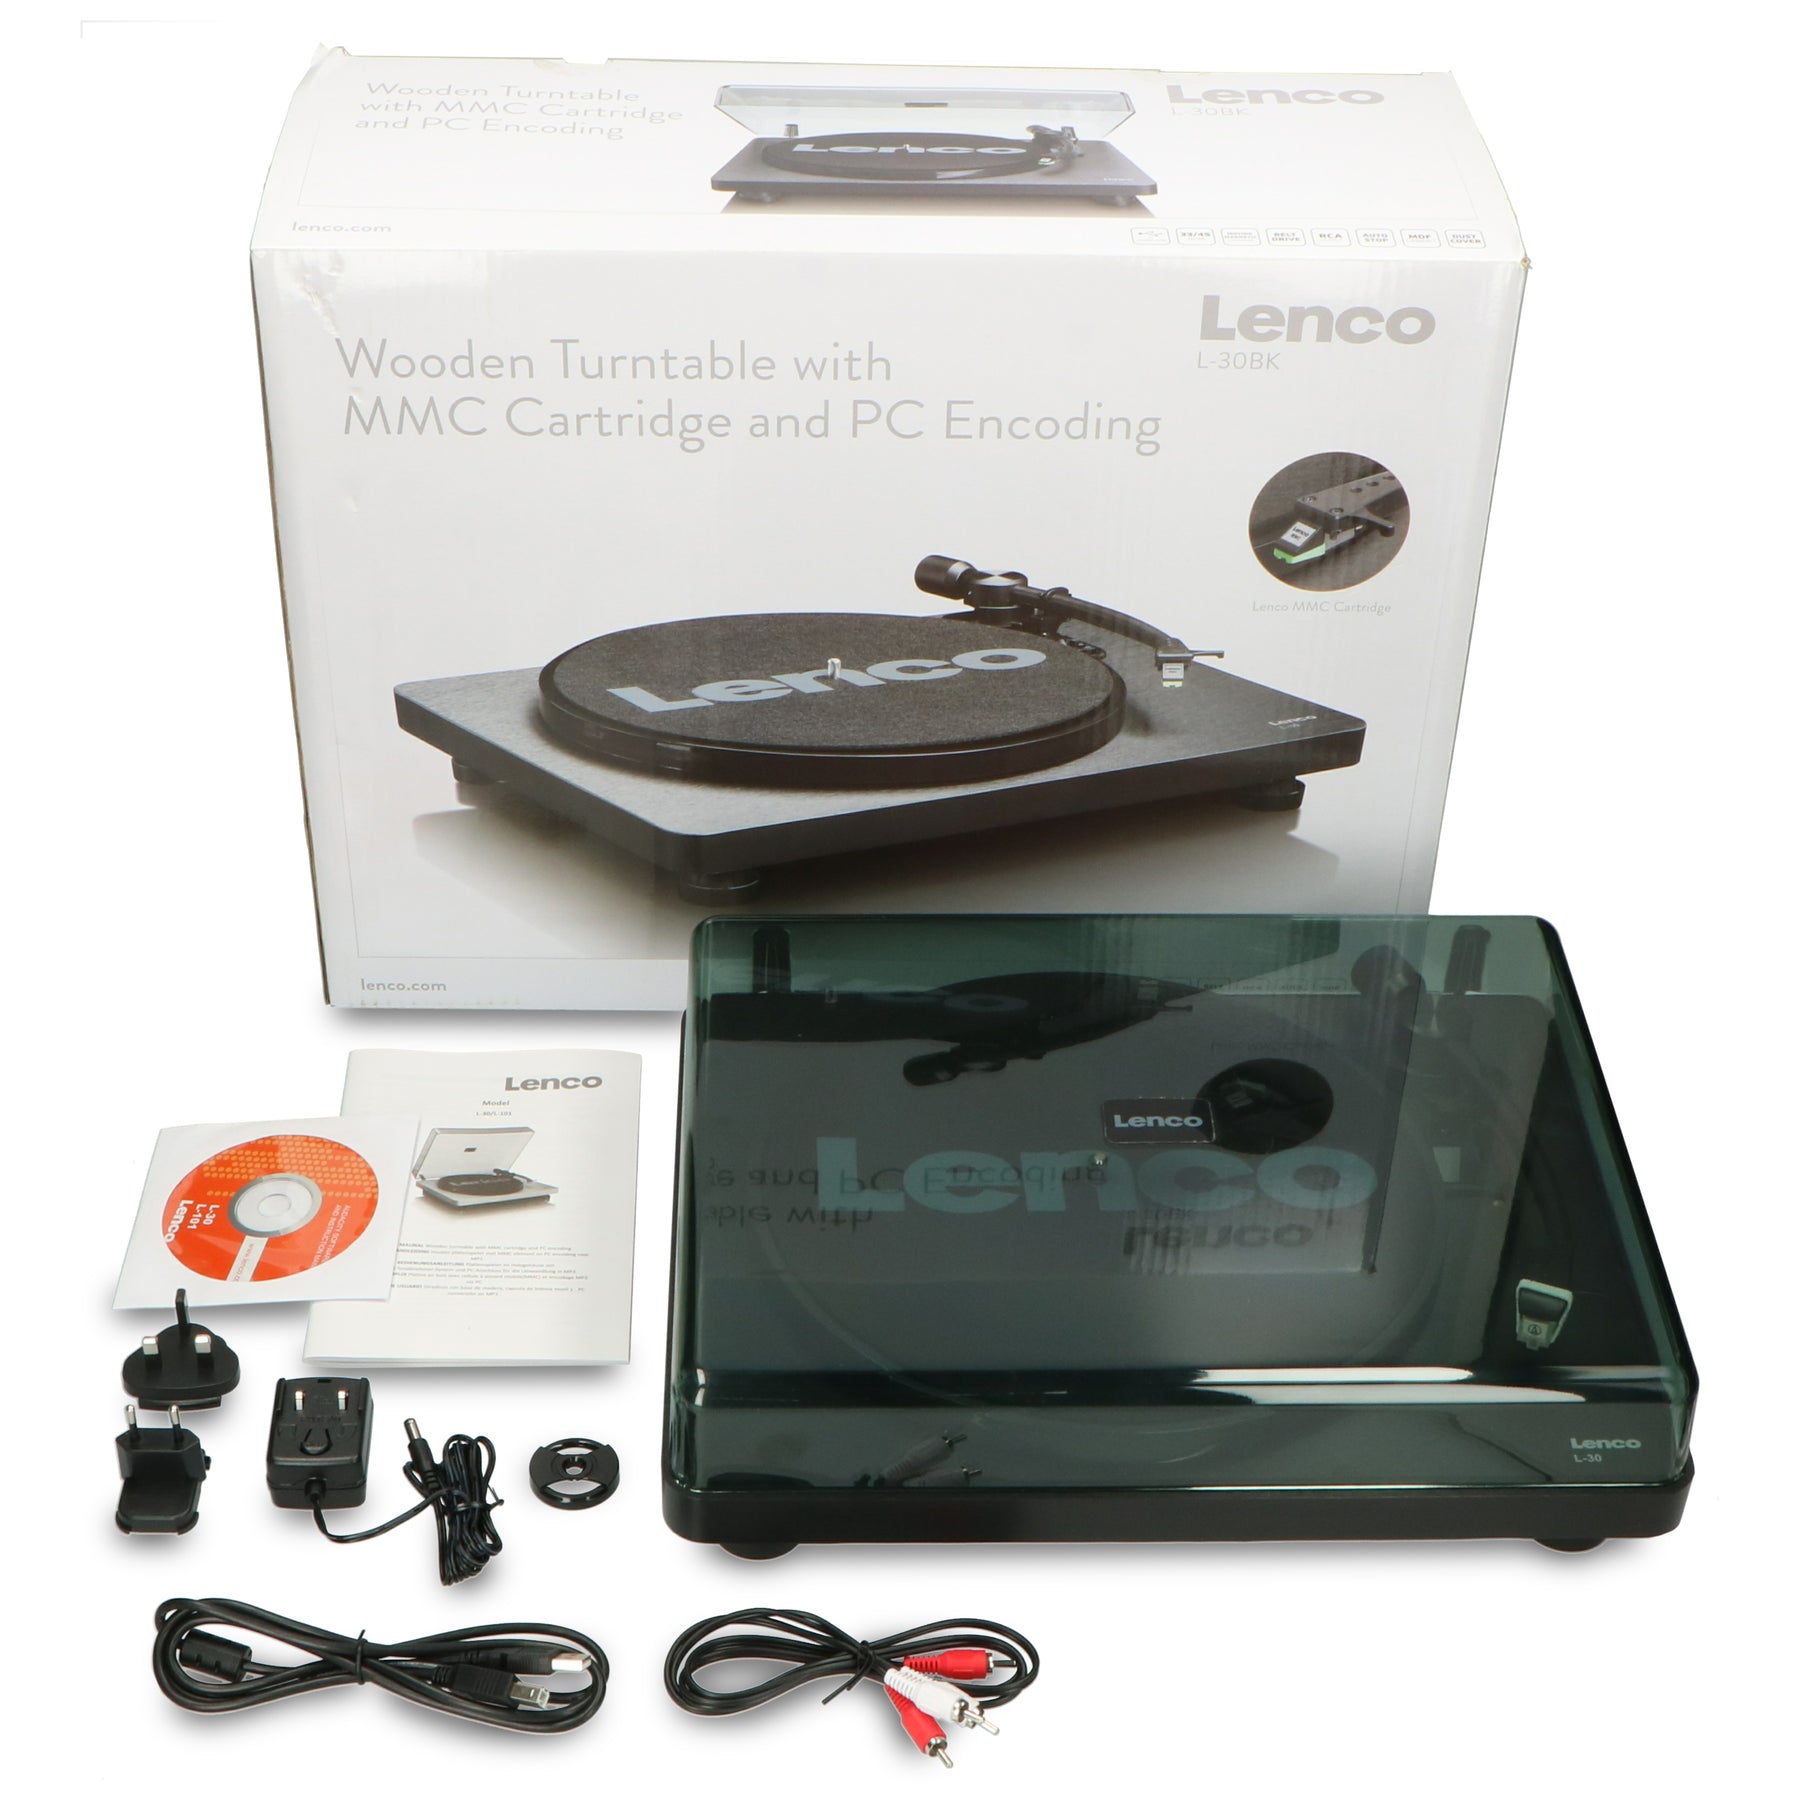 | Jetzt Webshop - Lenco L-30 – Webshop offiziellen Offizieller Lenco im kaufen? Lenco.de